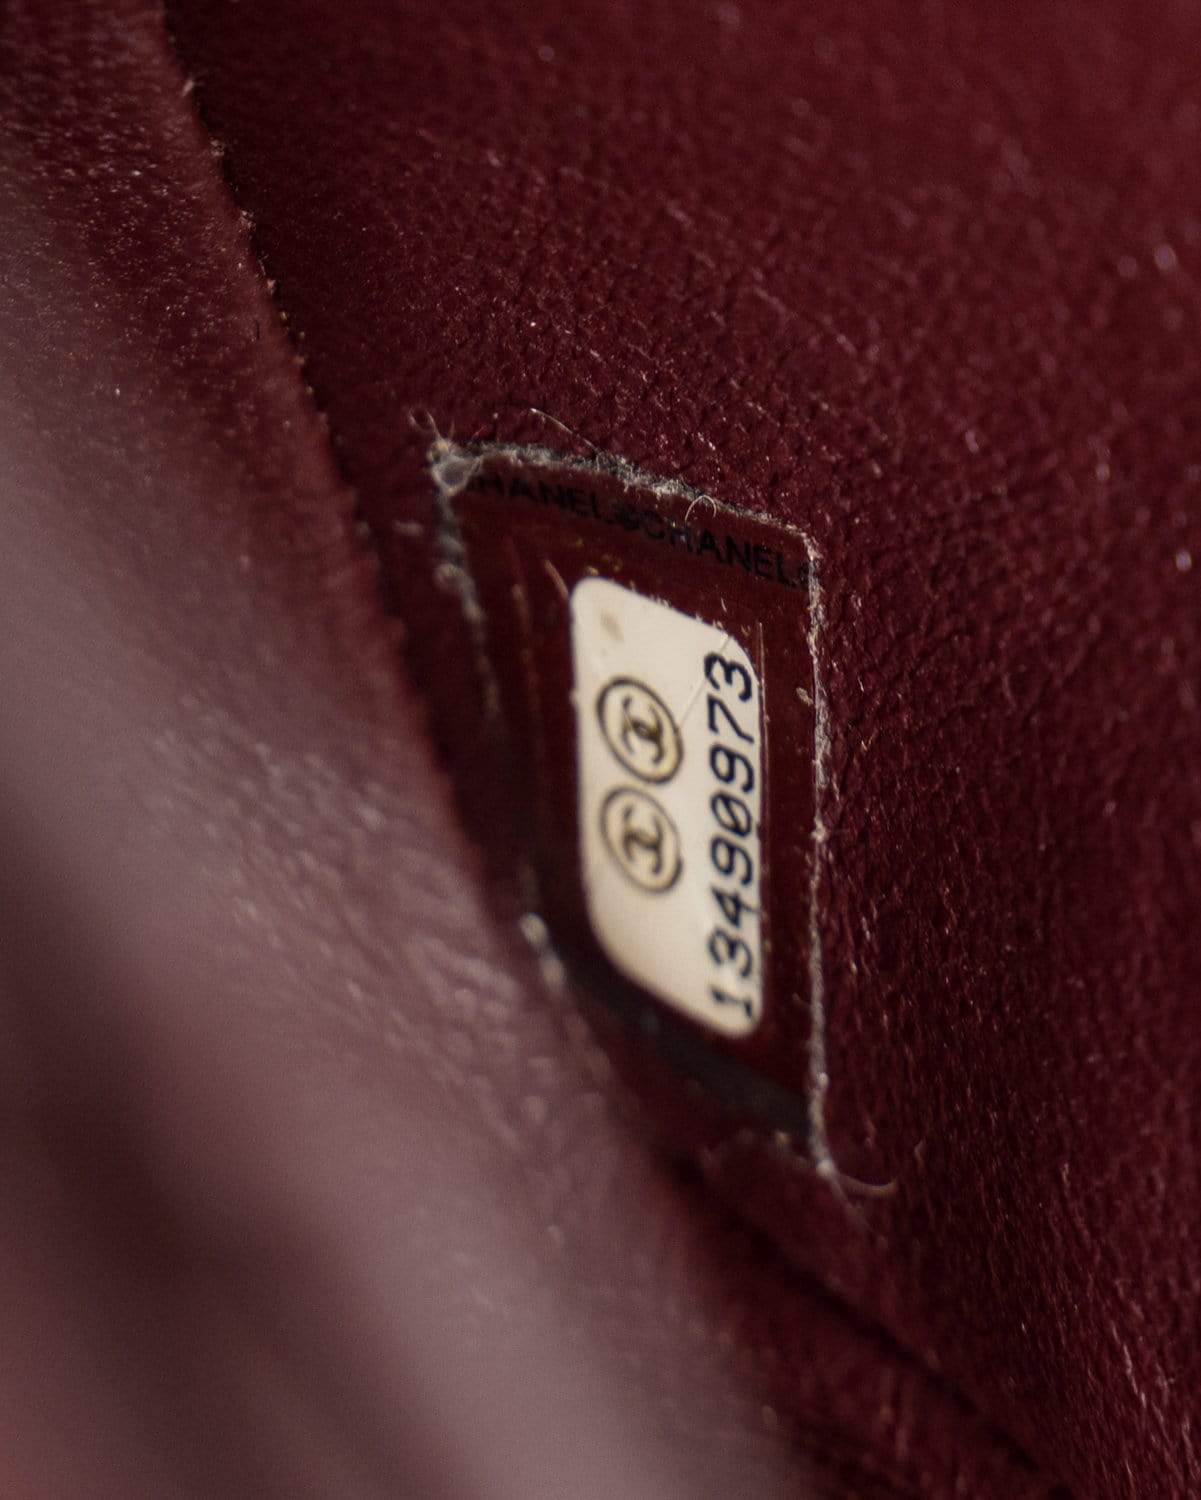 Chanel Chanel Black Lambskin Leather Medium Classic Double Flap Bag - AGL1442